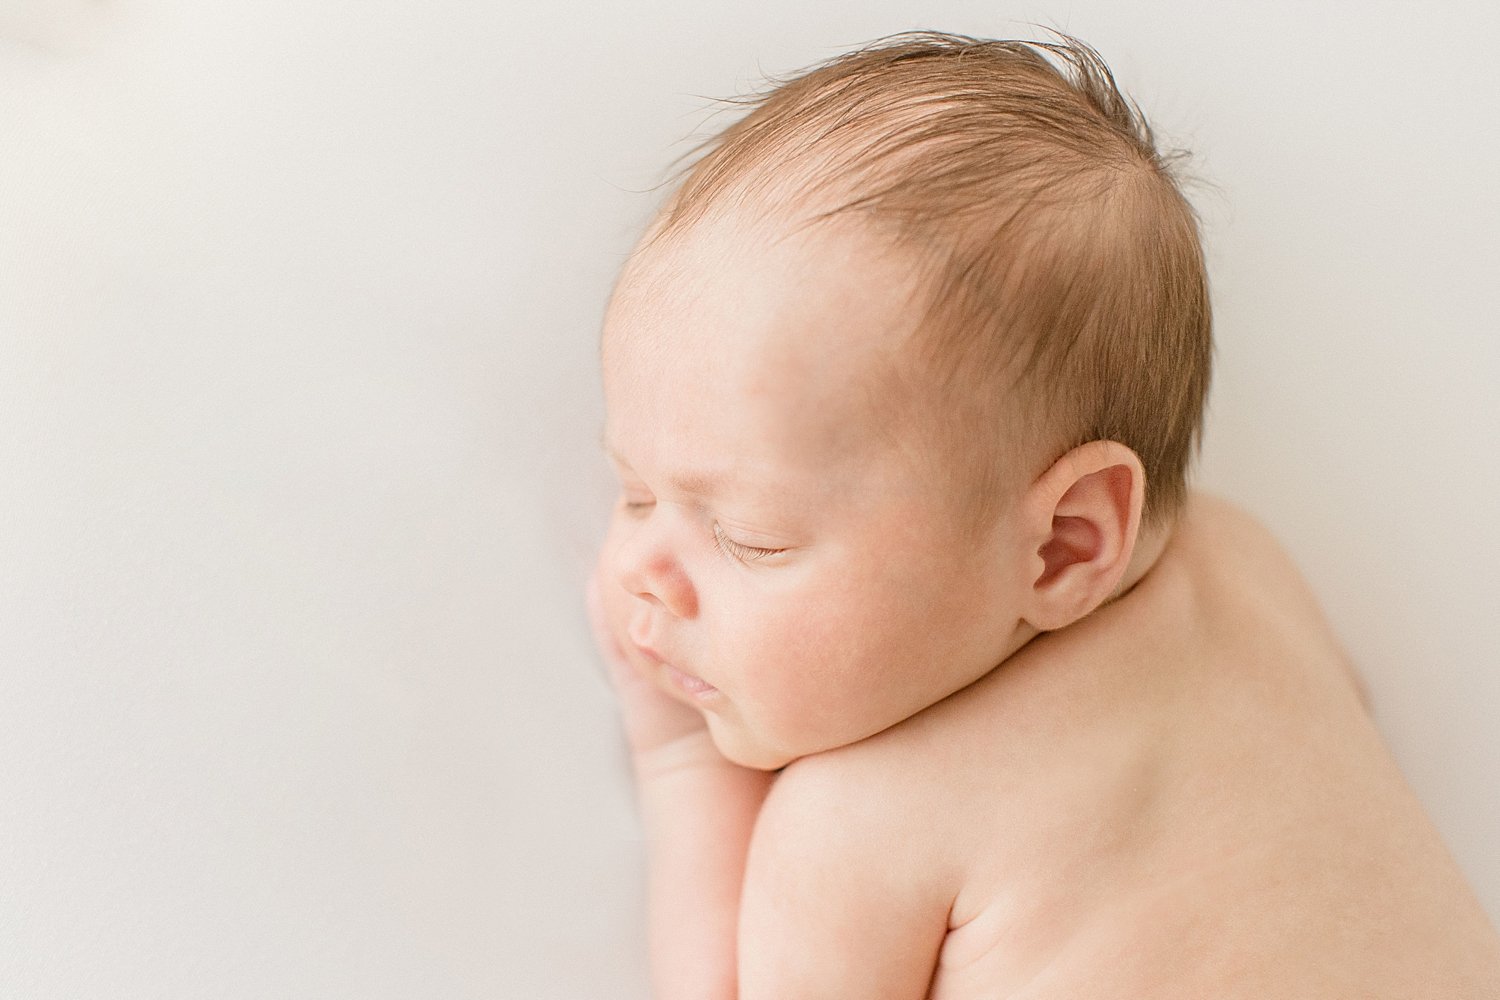 Studio newborn session for baby boy | Ambre Williams Photography